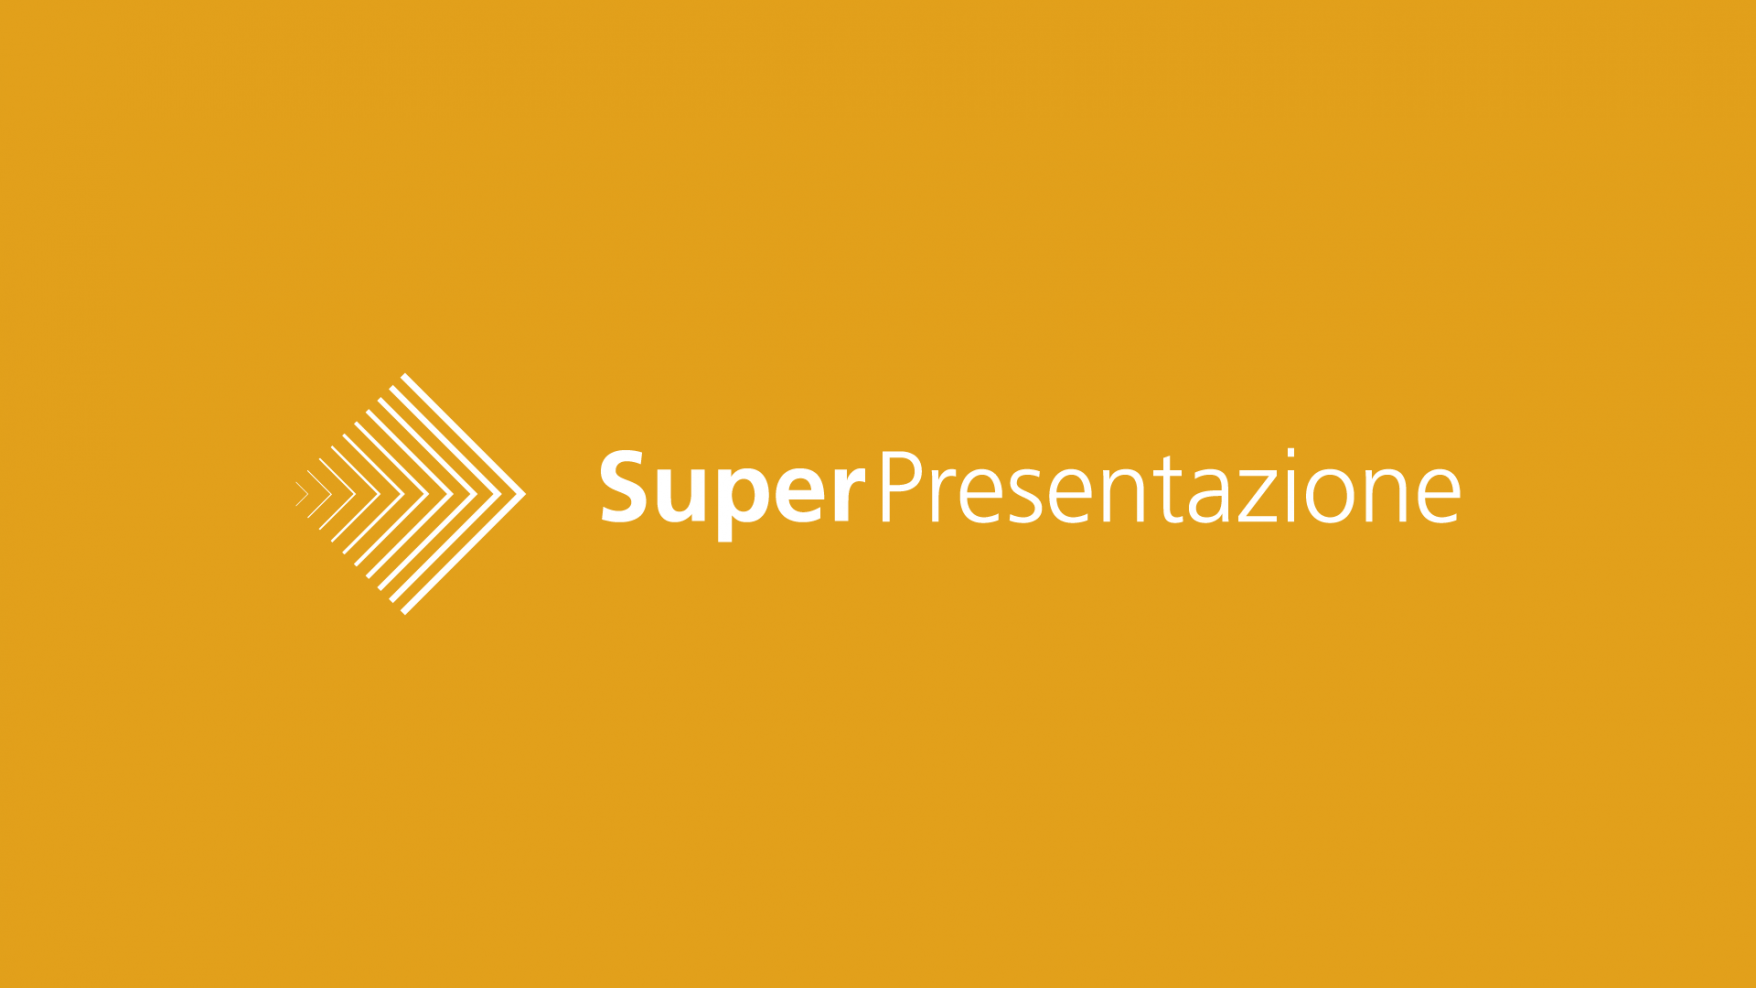 Super Presentazione logo